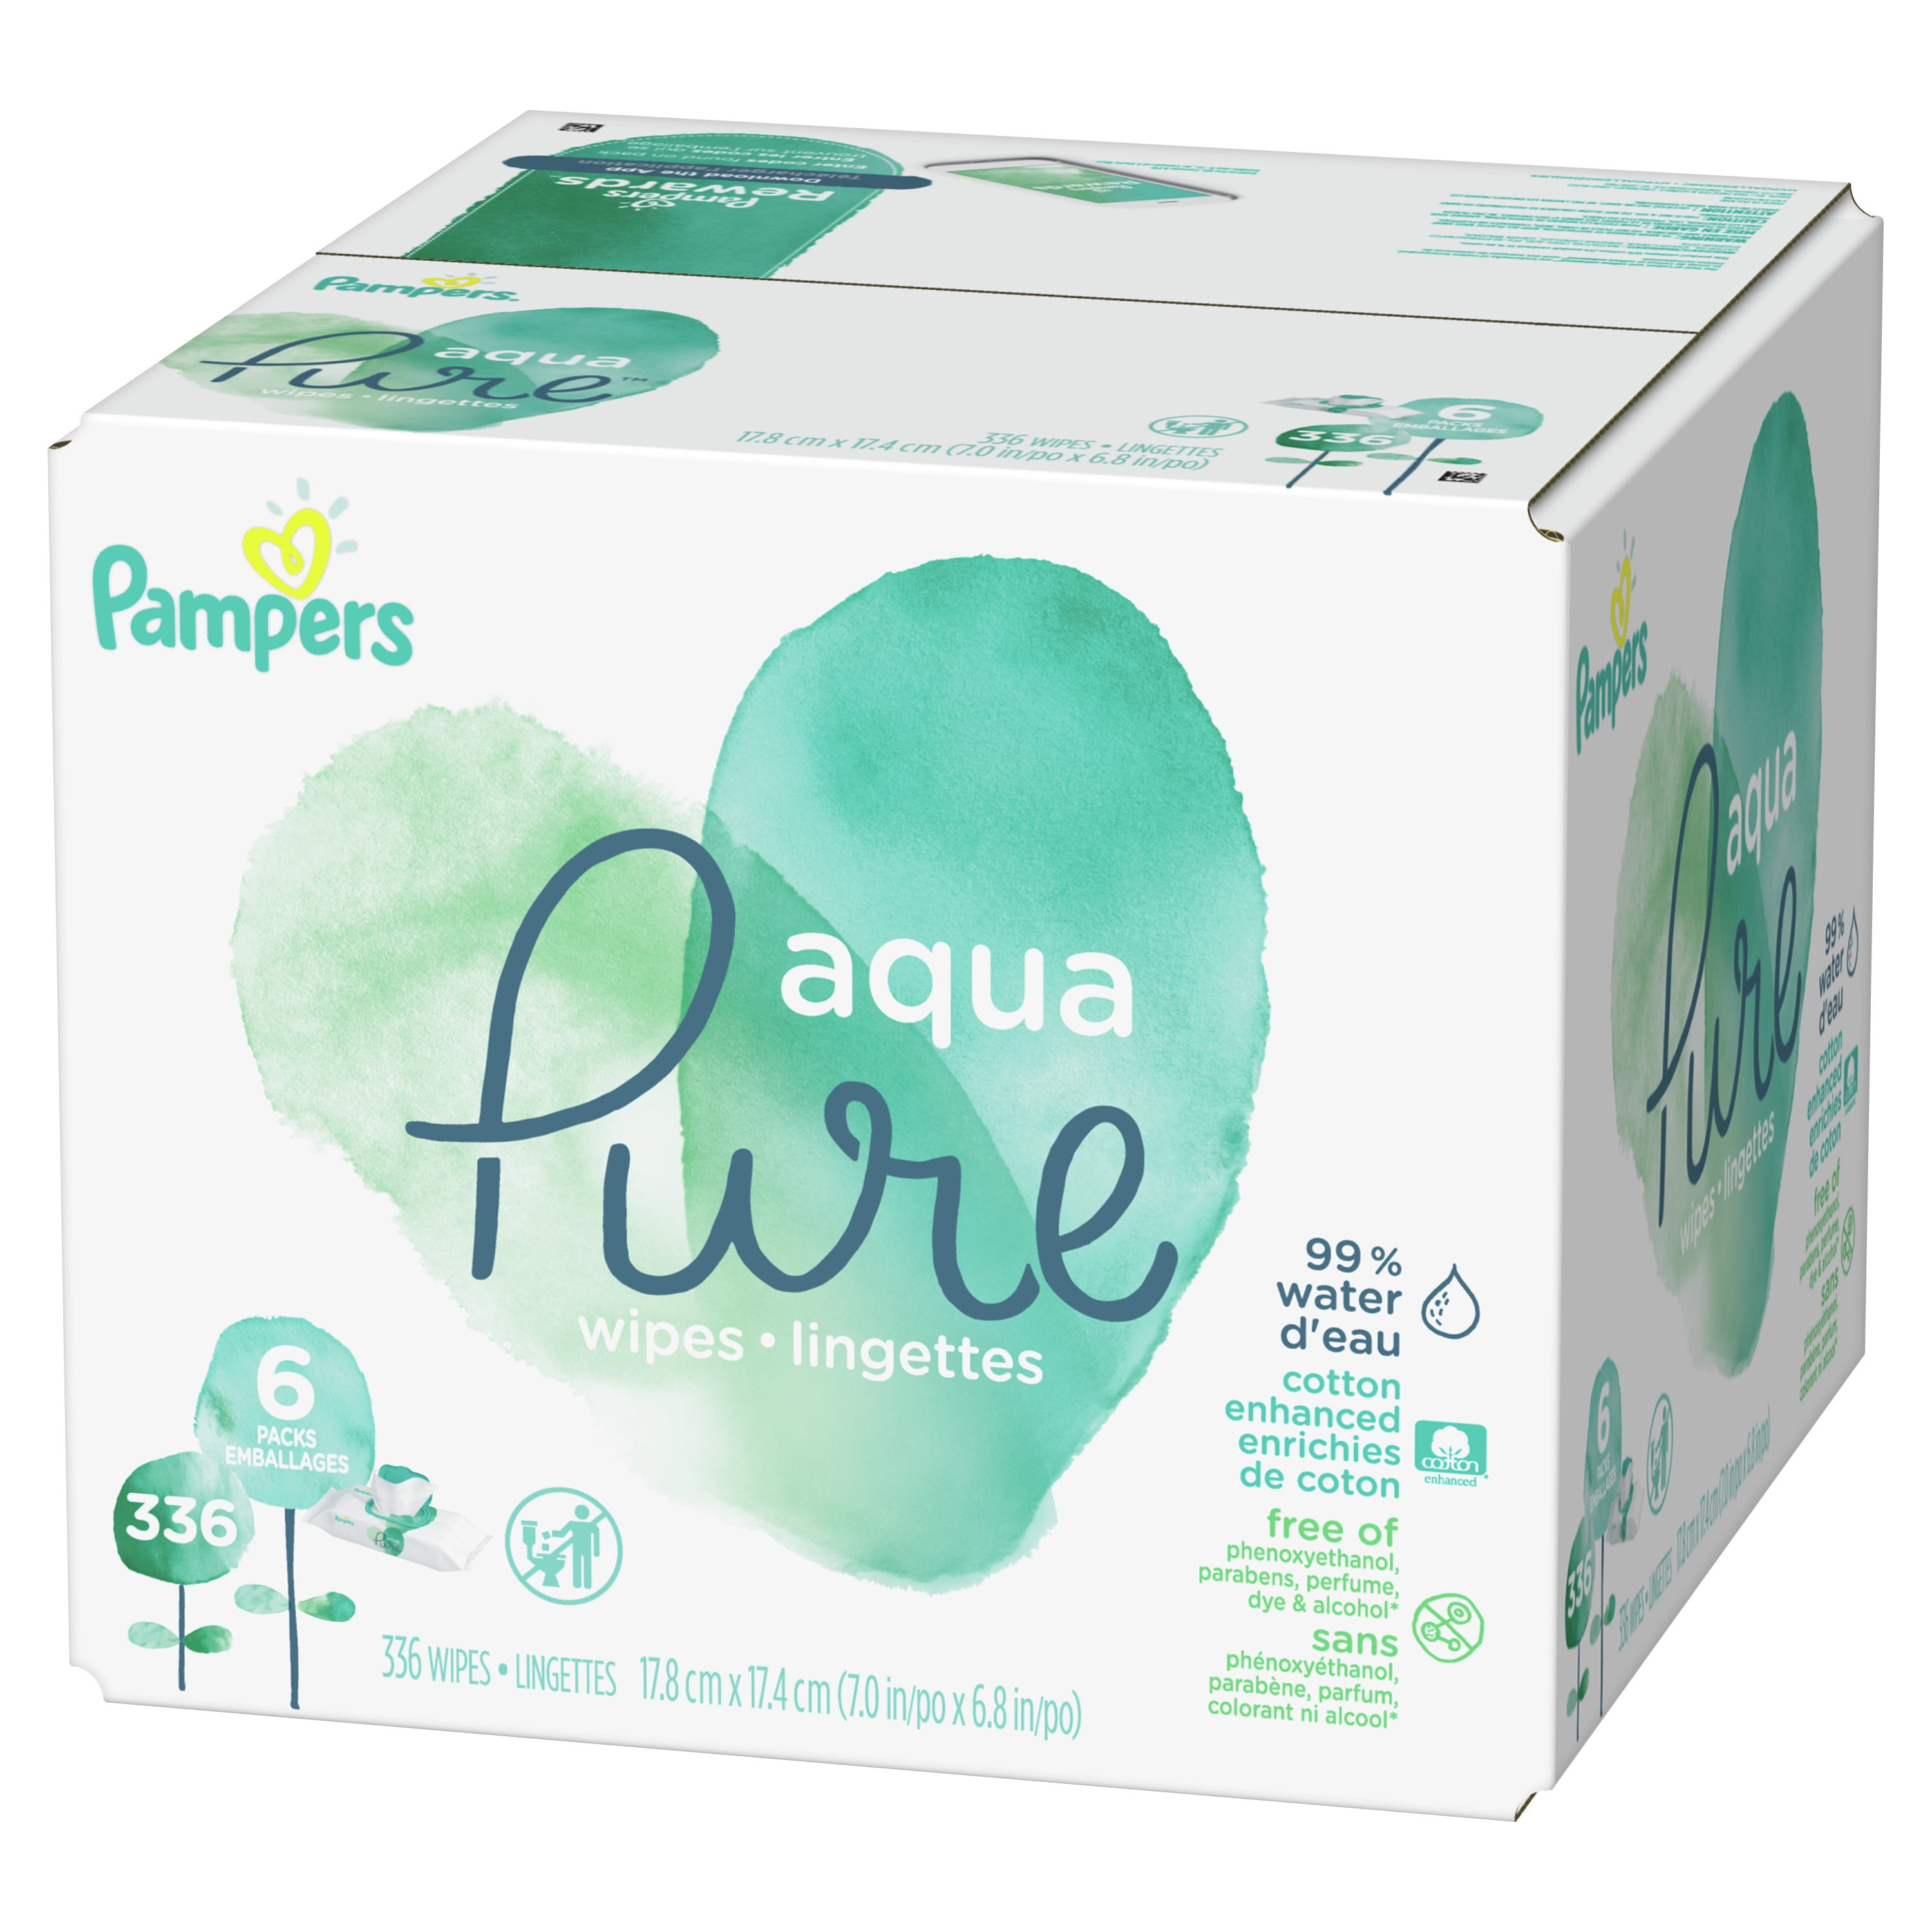 Bibena Aqua Baby Water Wipes PromoBox (12 packs x 60 wipes